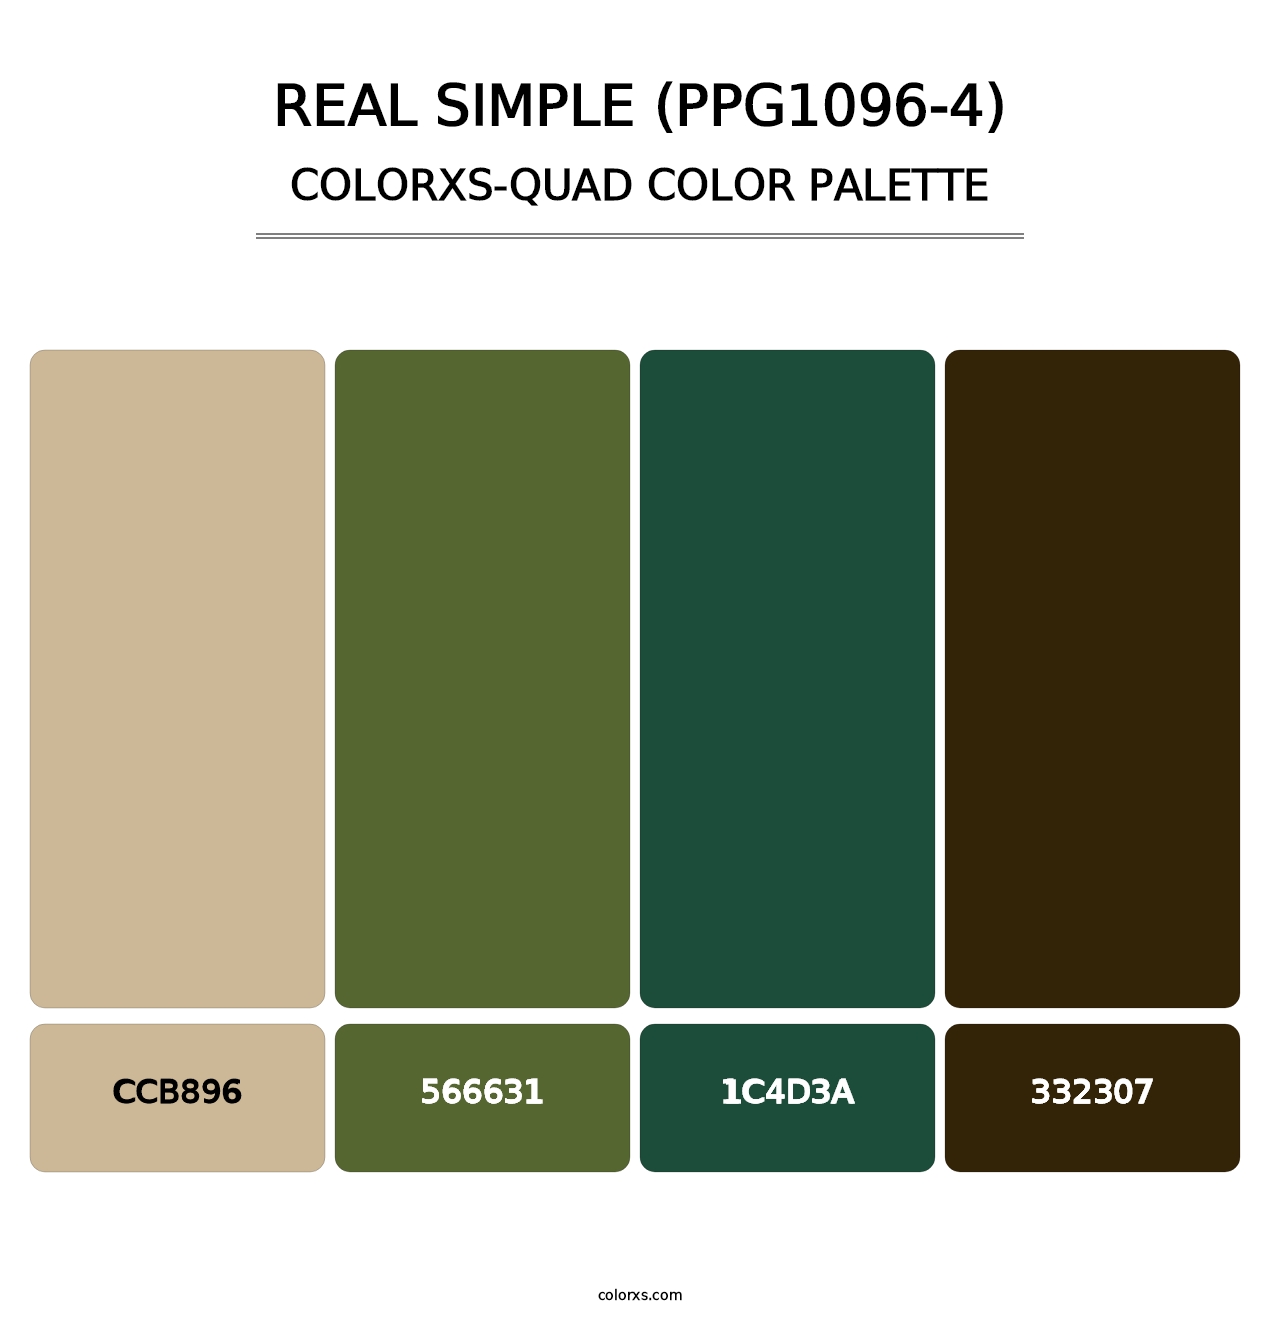 Real Simple (PPG1096-4) - Colorxs Quad Palette